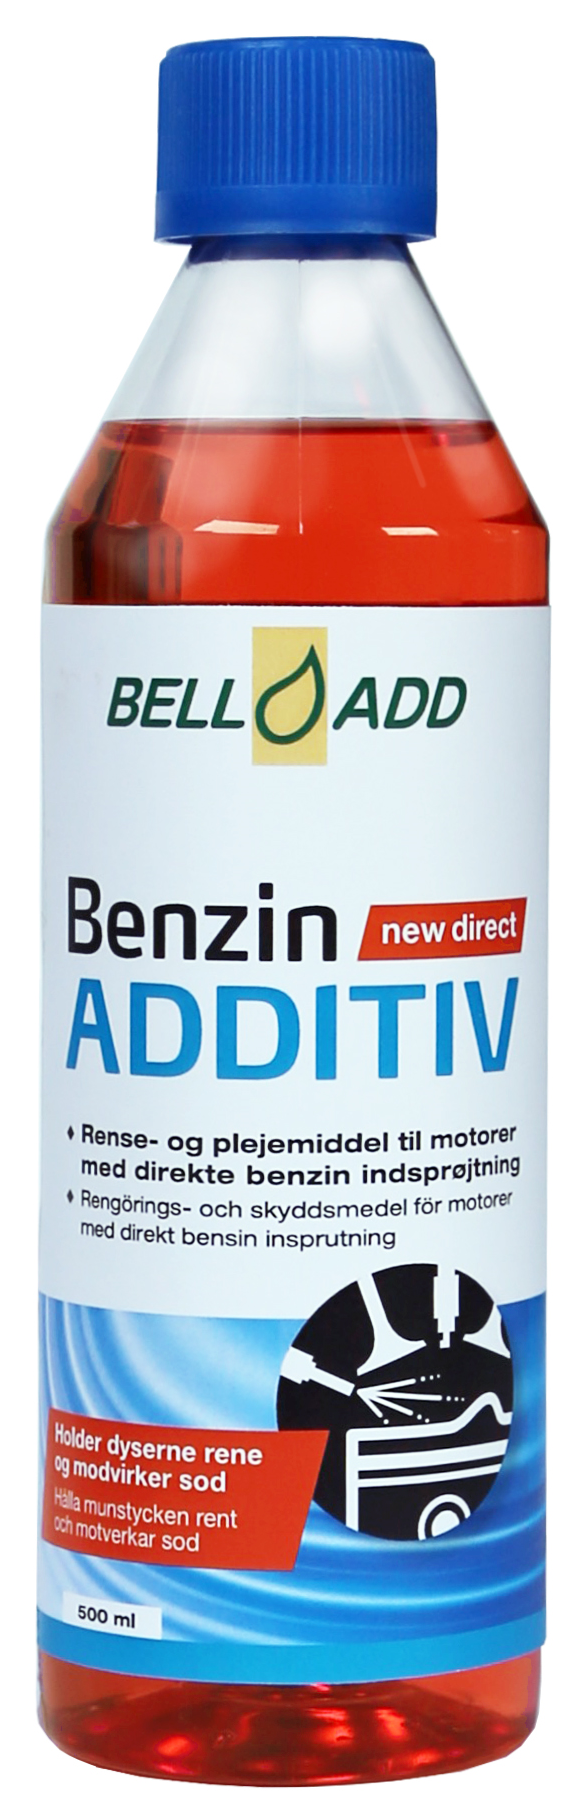 Bell Add benzin Additiv New Direct til rensning 500ml